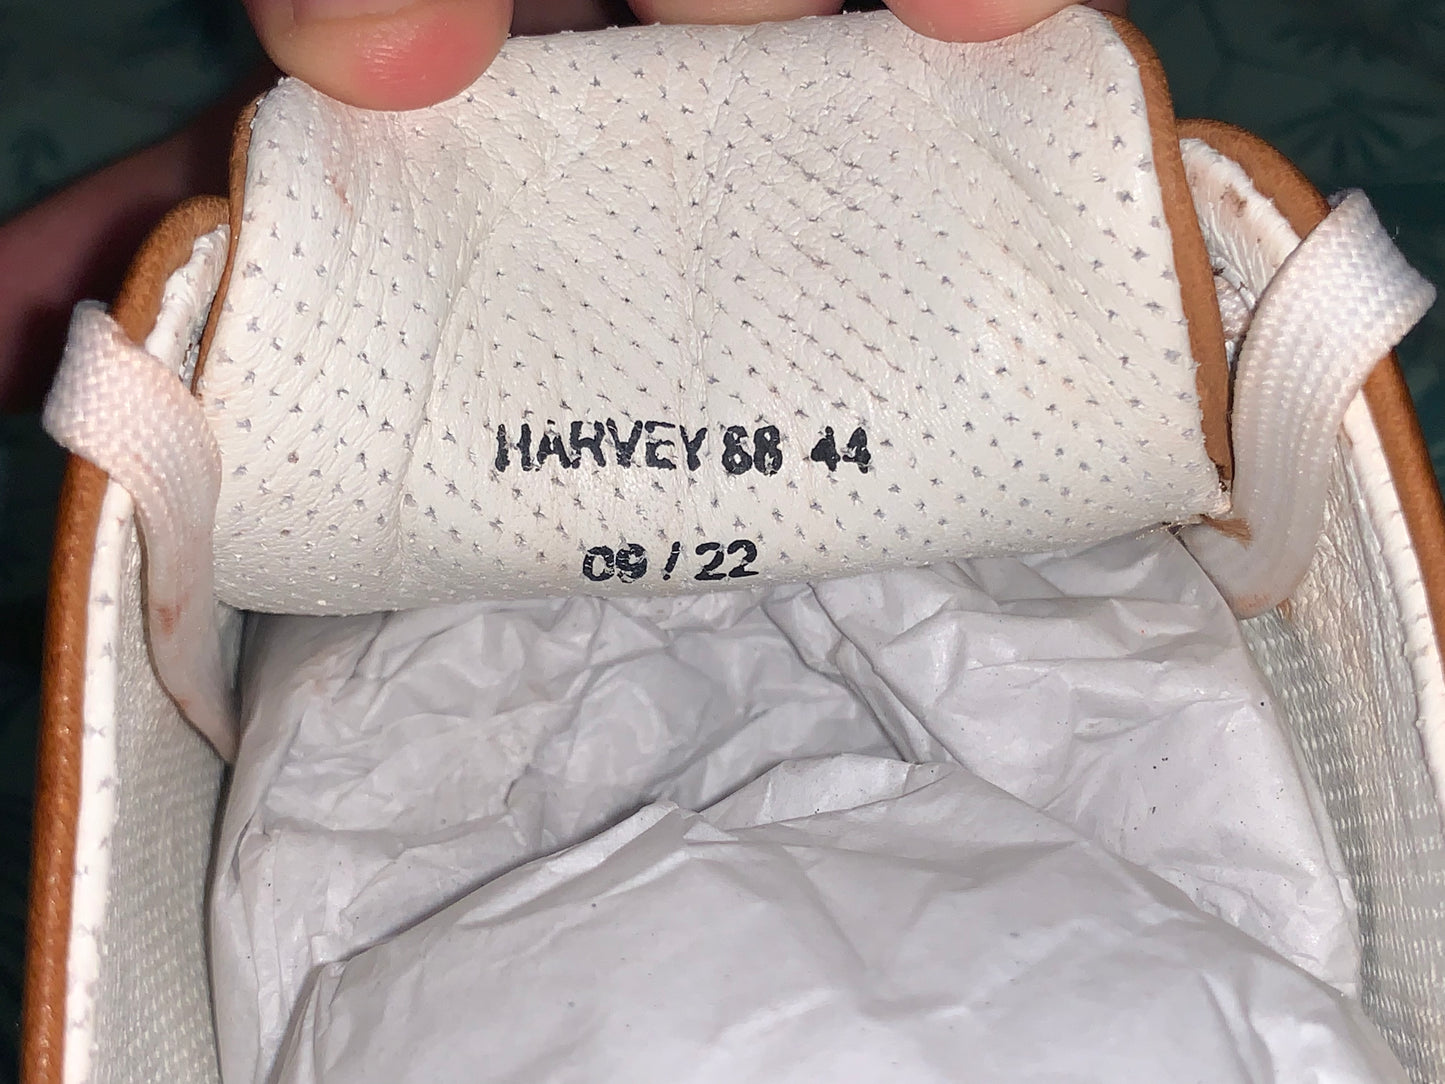 Harvey 88